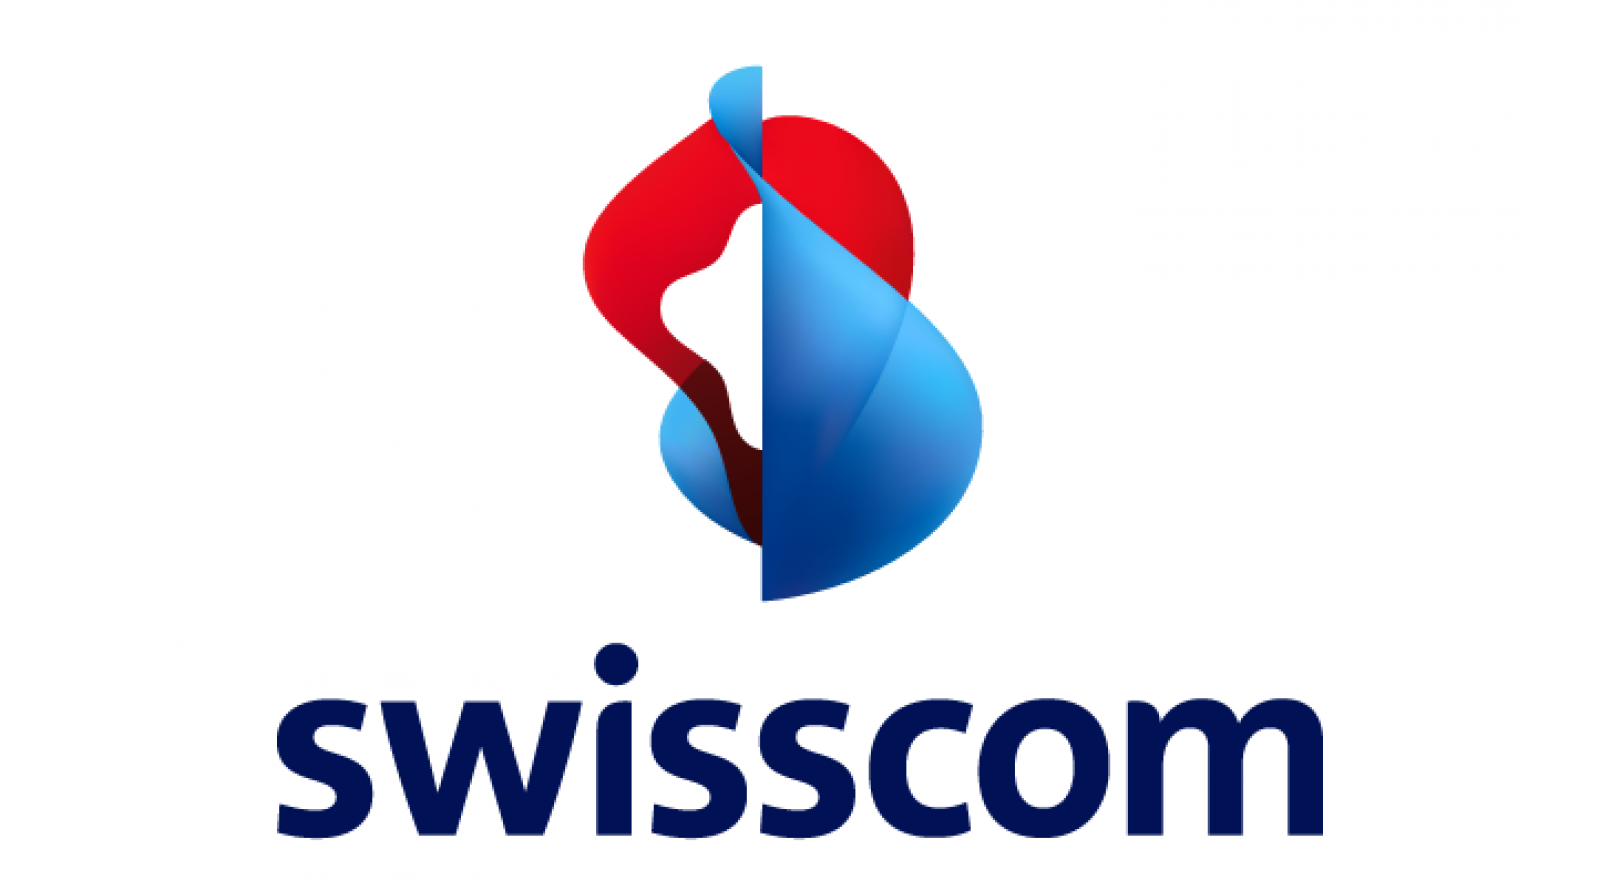 Swisscom Stacked Primary RGB